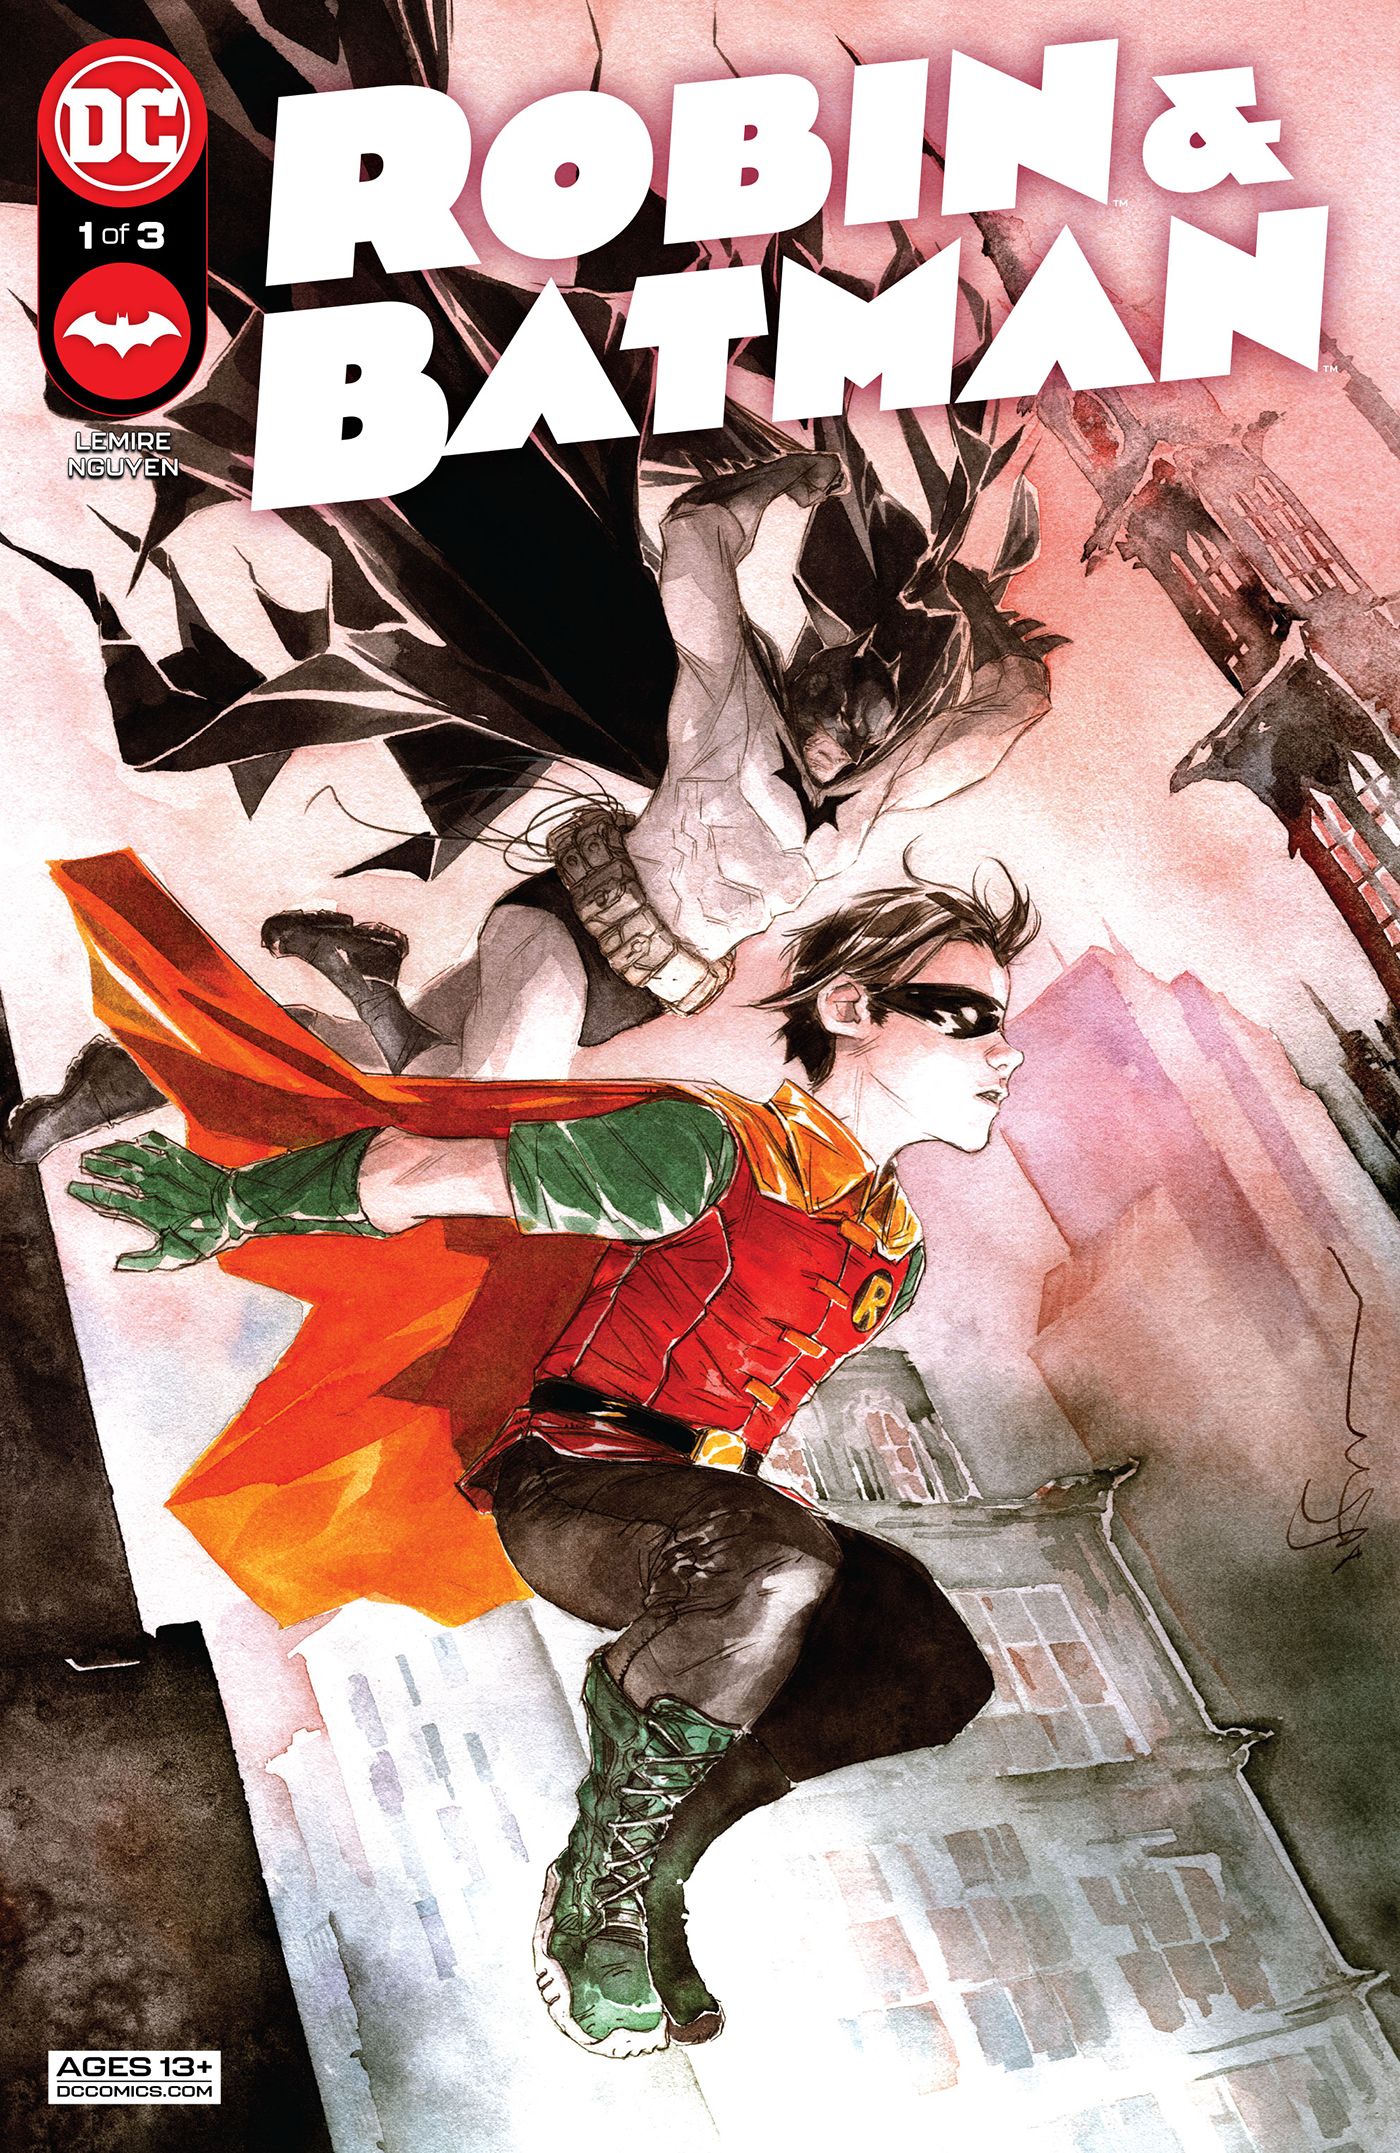 Dick Grayson as Robin in Robin and Batman by Dustin Nguyen